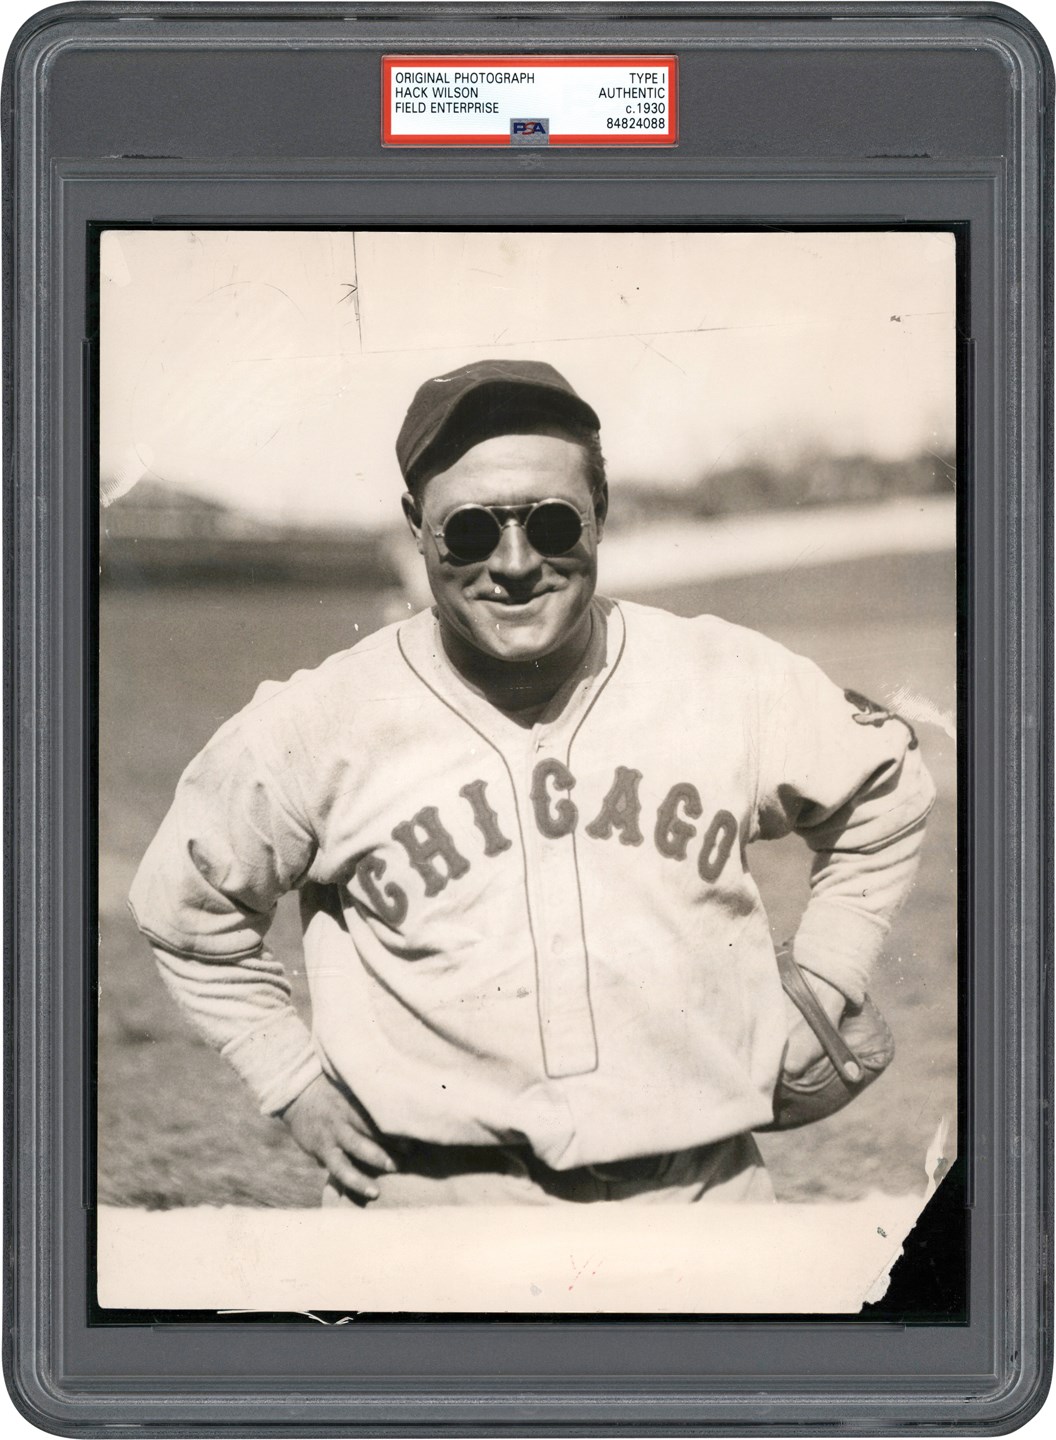 Vintage Sports Photographs - 1930 Hank Wilson Photograph (PSA Type I)